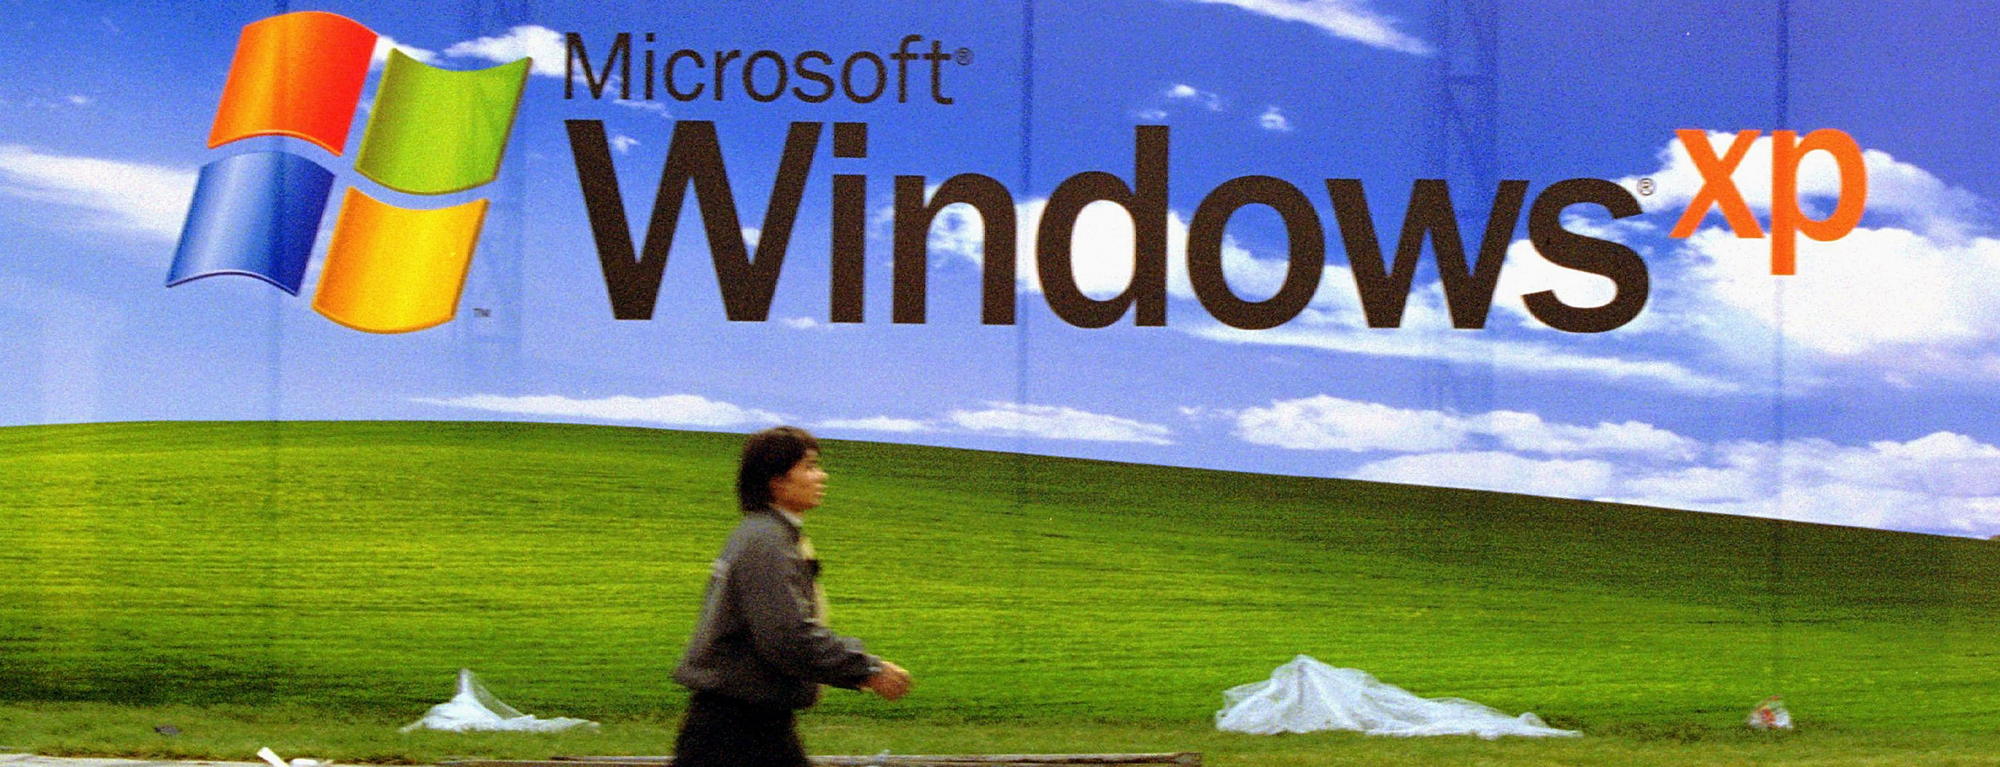 Windows Xp Background Taken - HD Wallpaper 